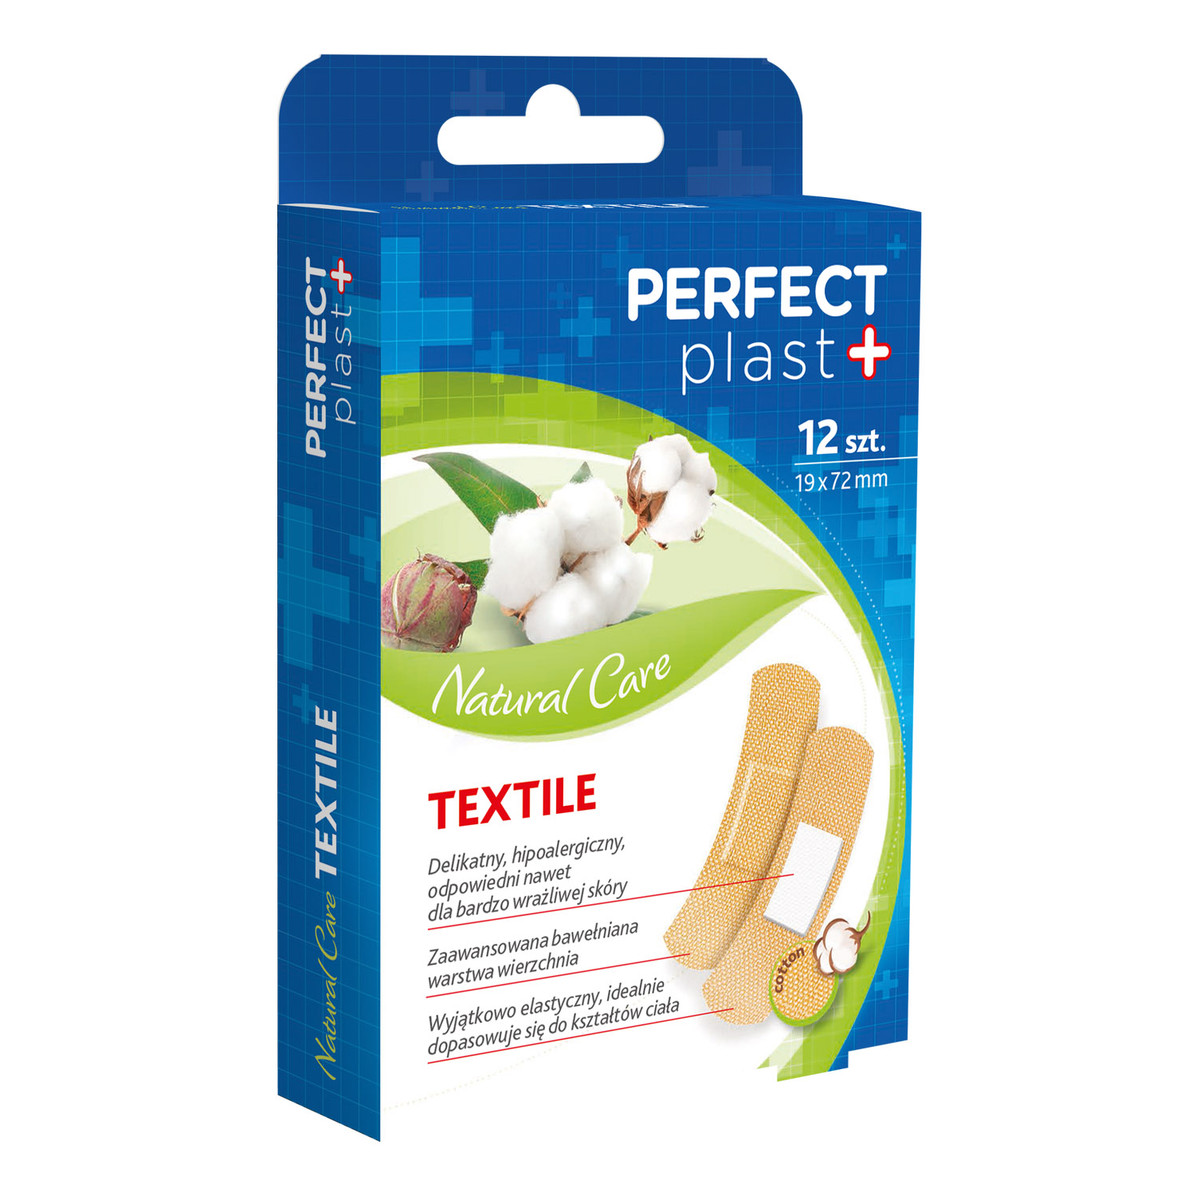 Perfect Plast Natural Care plastry opatrunkowe Textile 20szt